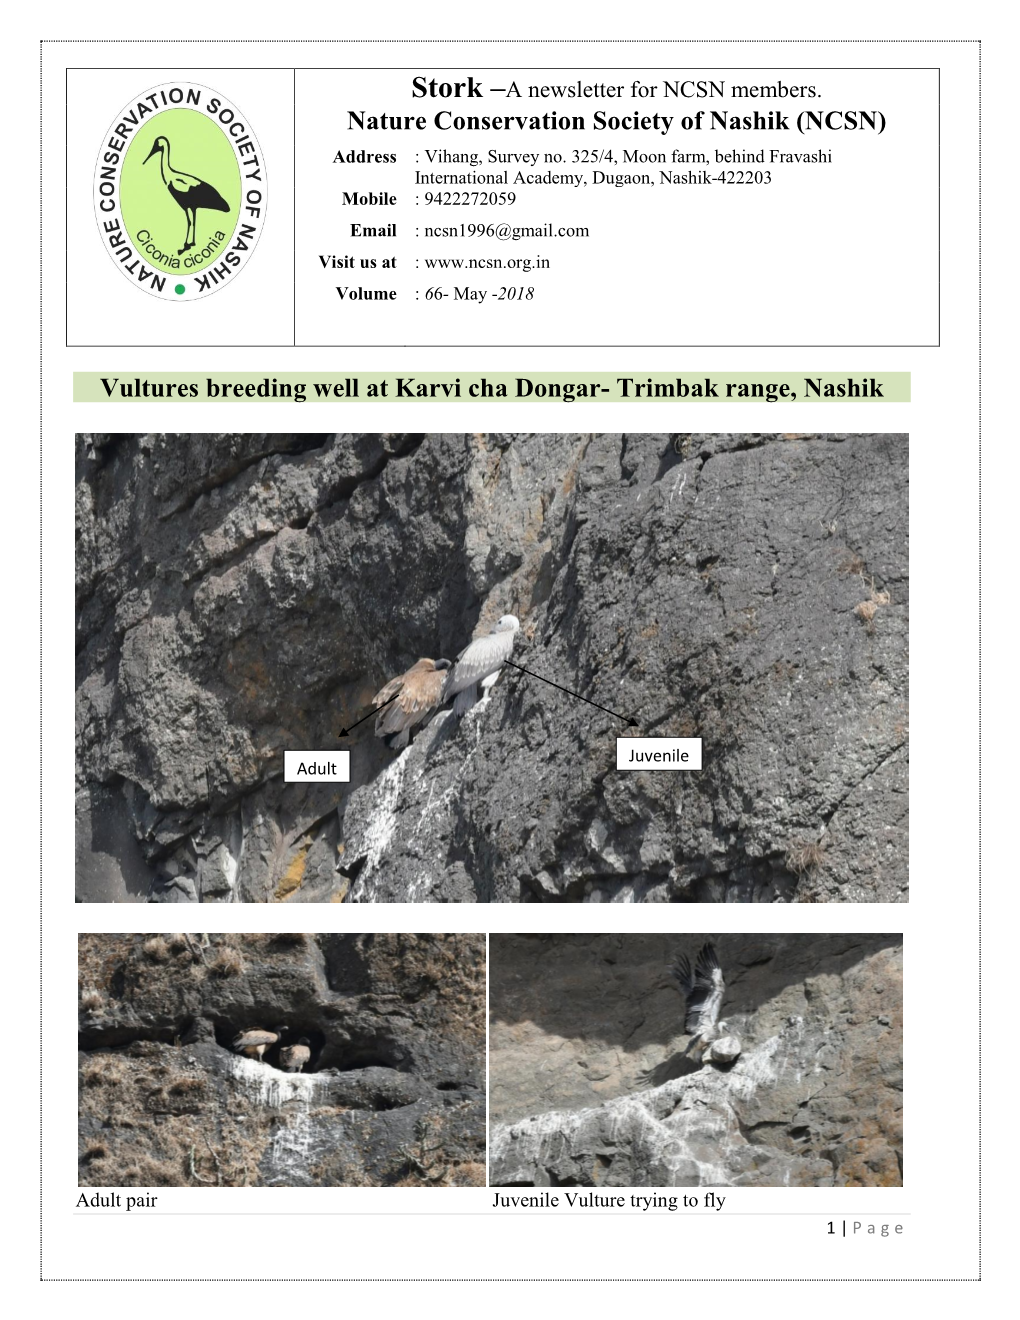 Nature Conservation Society of Nashik (NCSN) Vultures Breeding Well at Karvi Cha Dongar- Trimbak Range, Nashik